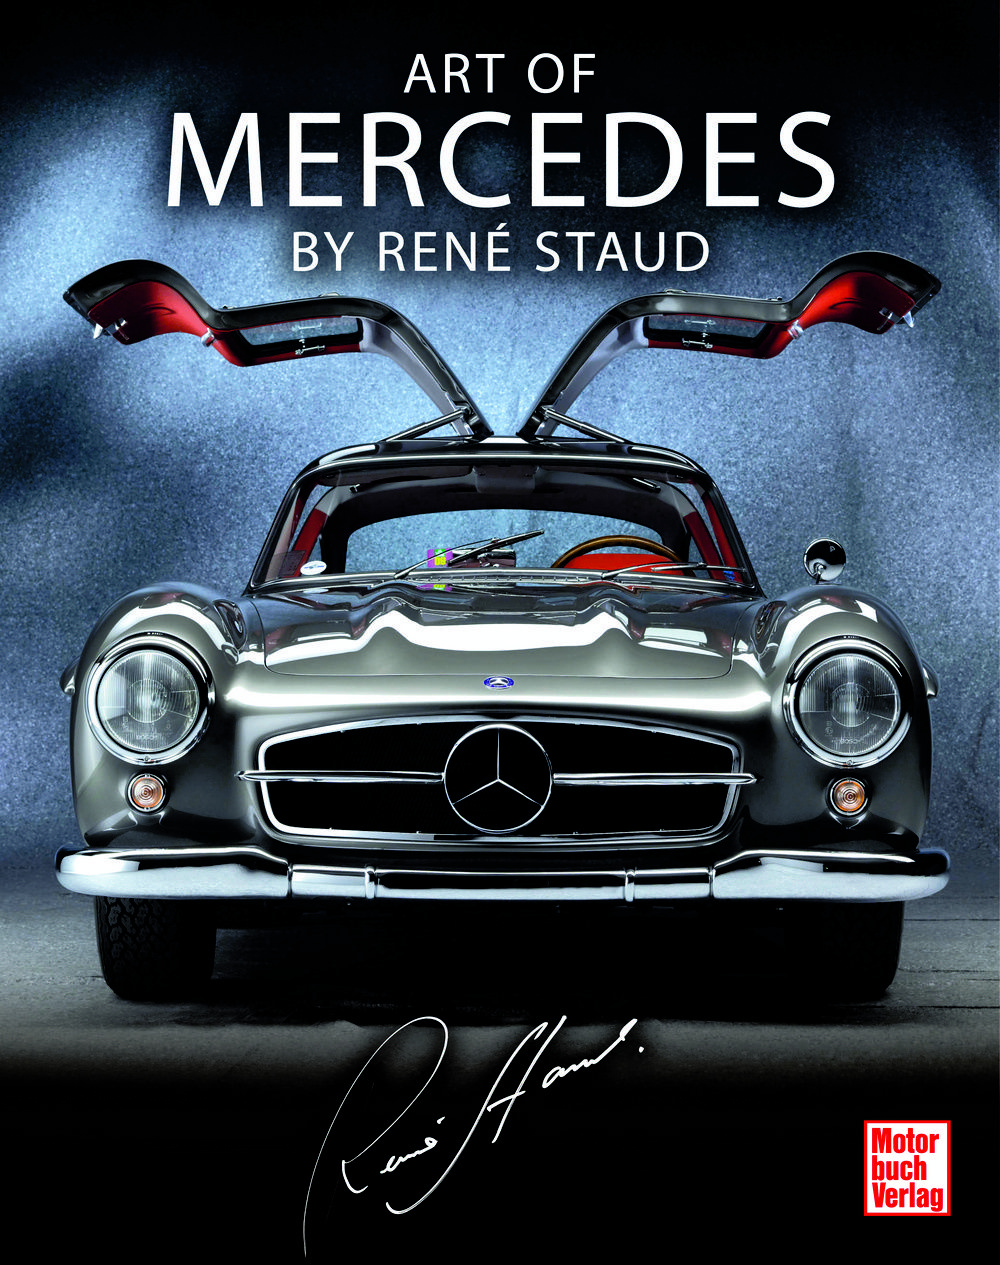 Art of Mercedes by René Staud